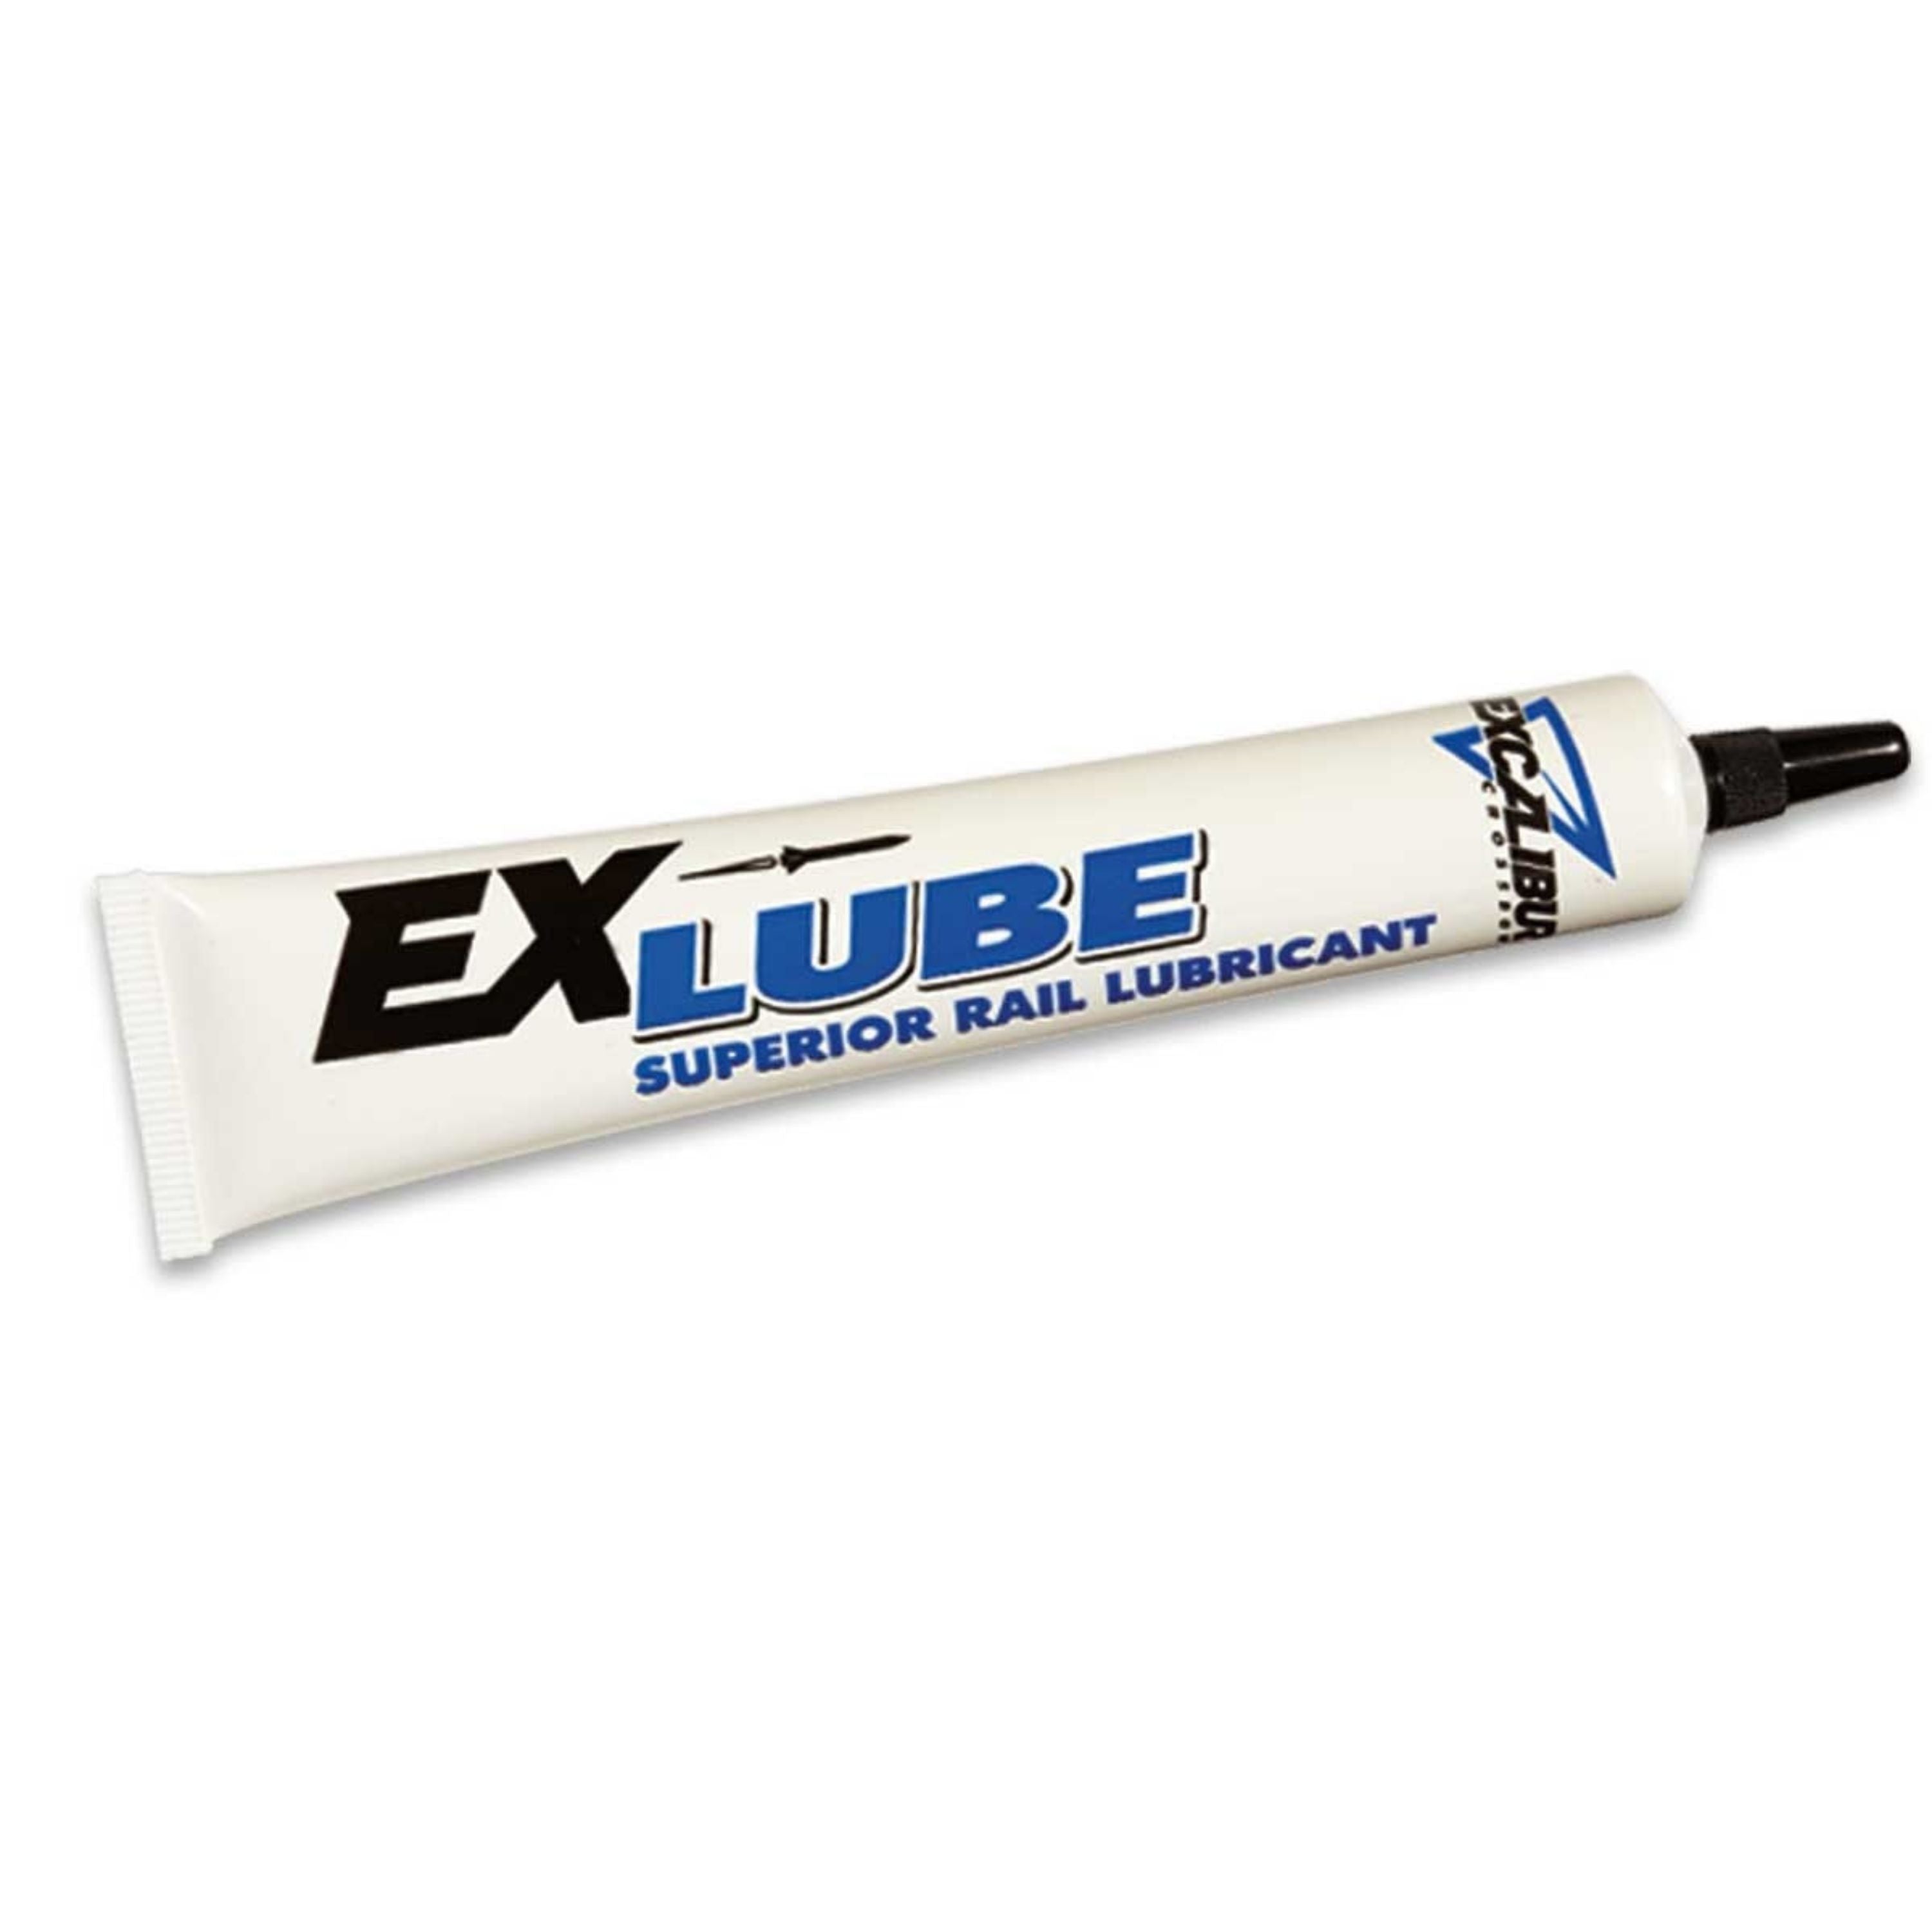 "Ex-lube" rail lubricant